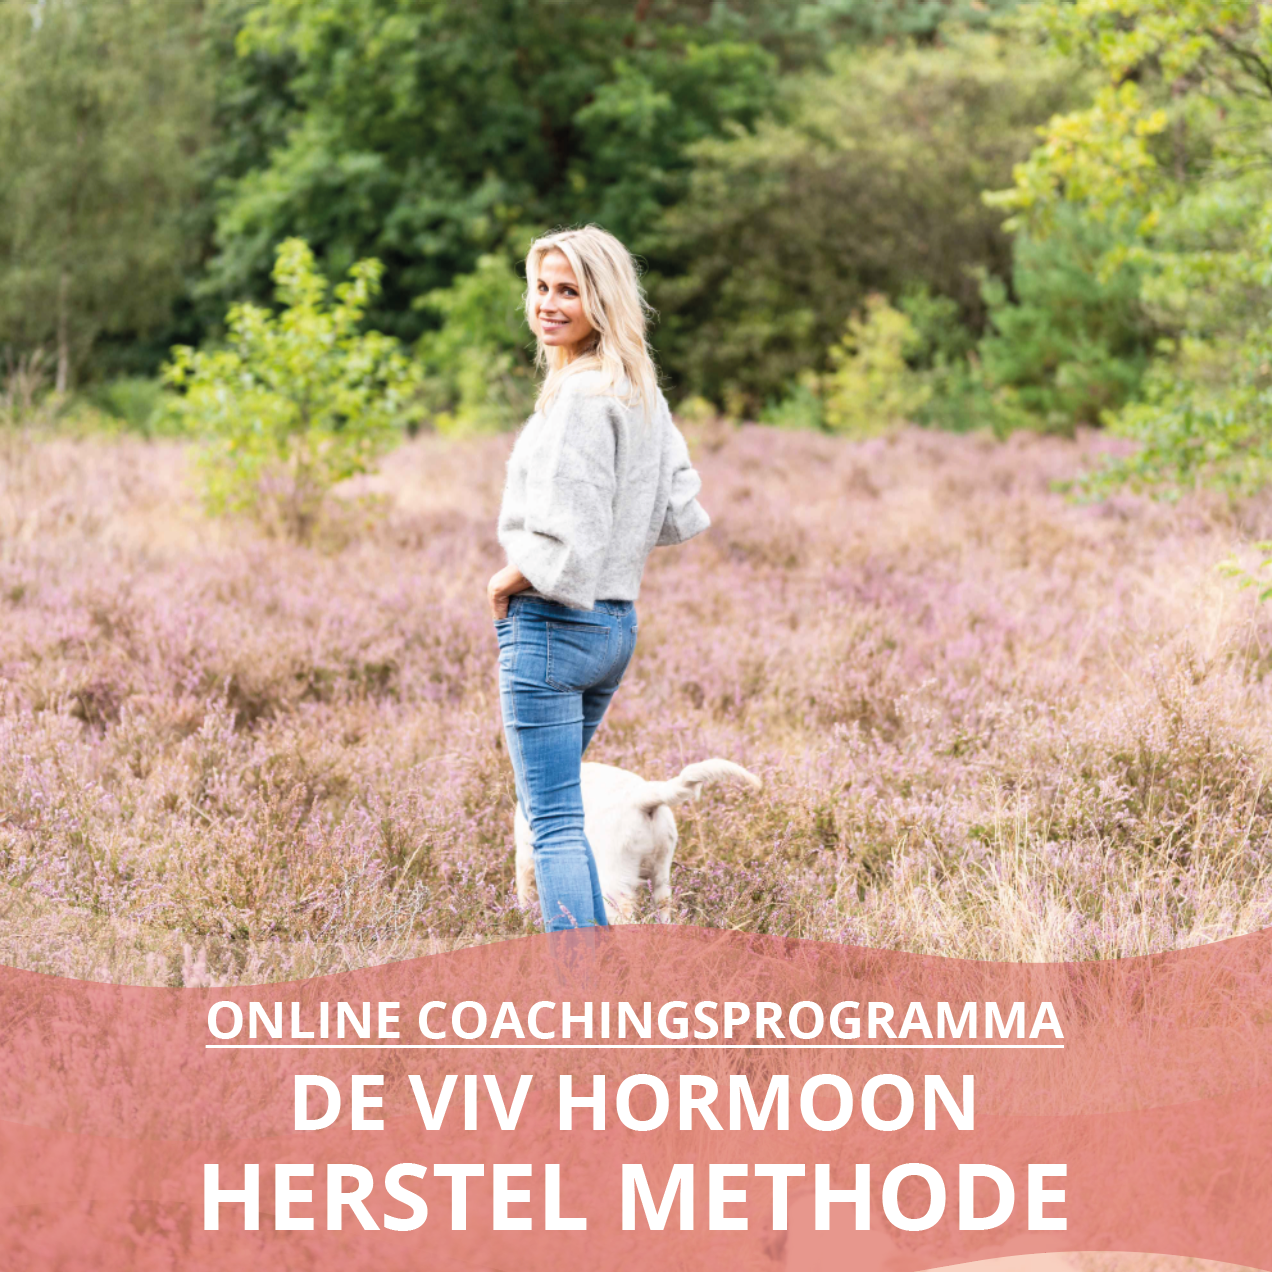 Viv hormoon herstel methode_online coaching